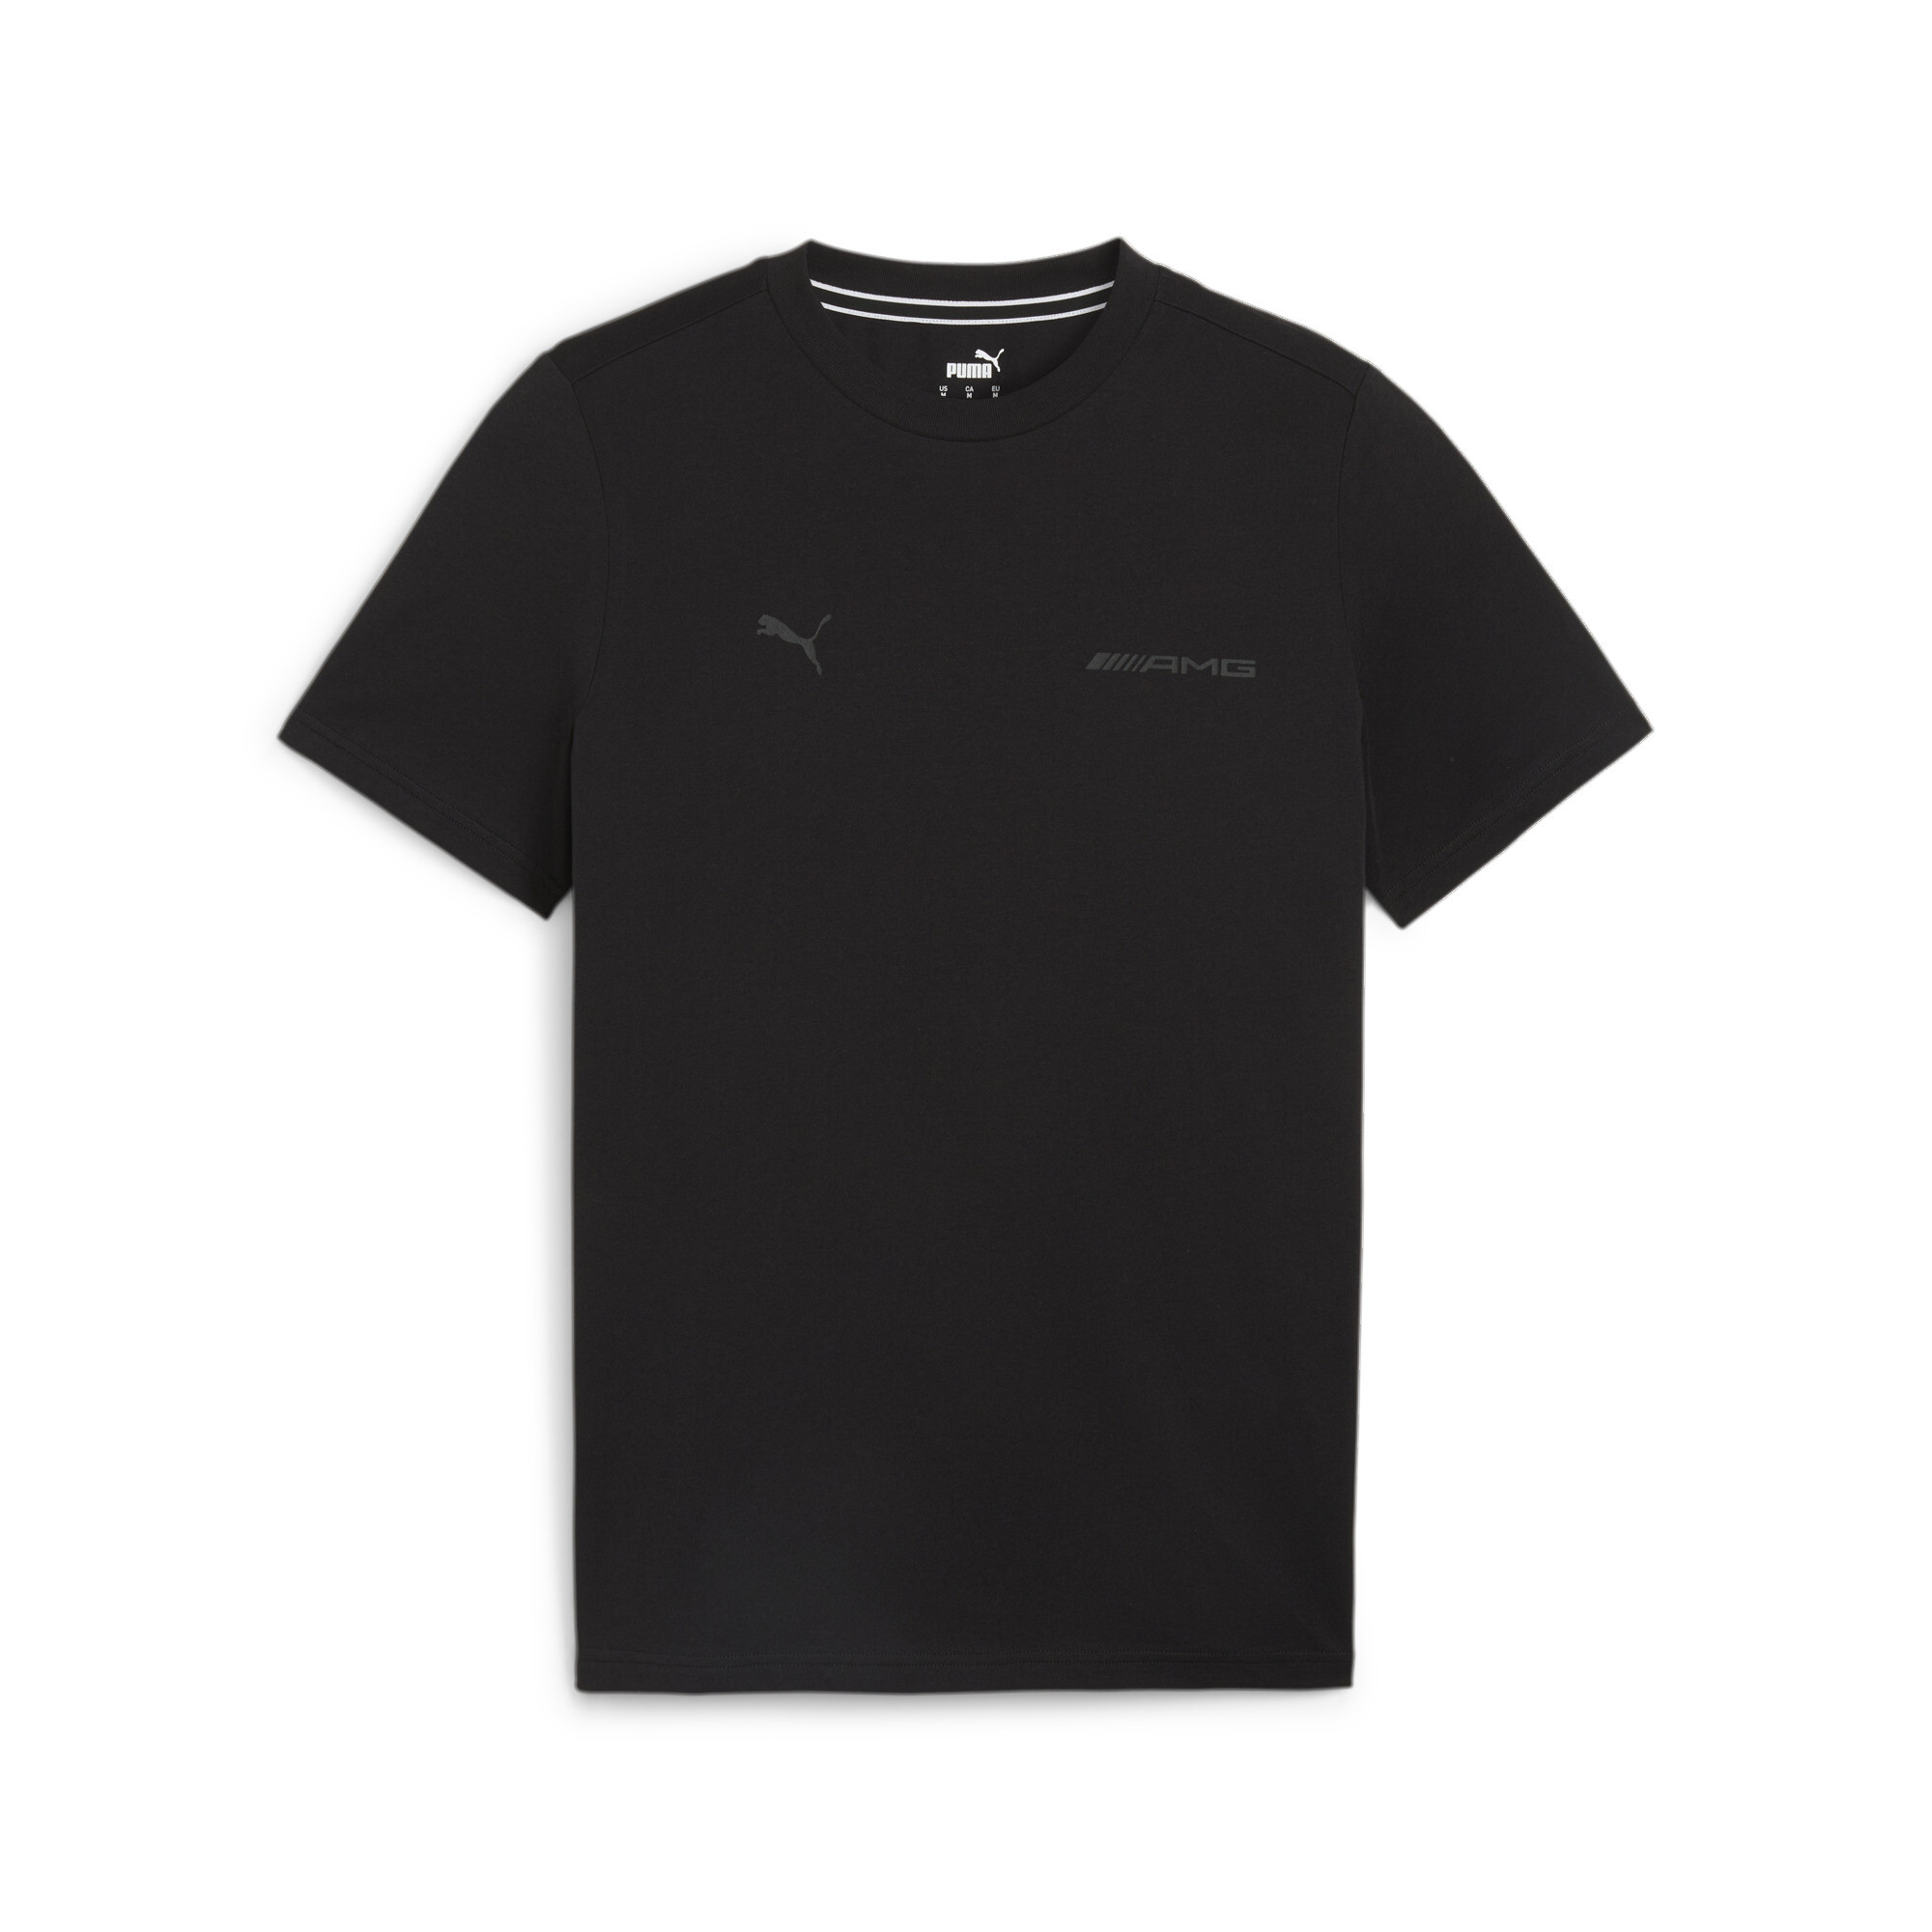 Men's Puma AMG Motorsports Graphic T-Shirt, Black, Size XS, Clothing